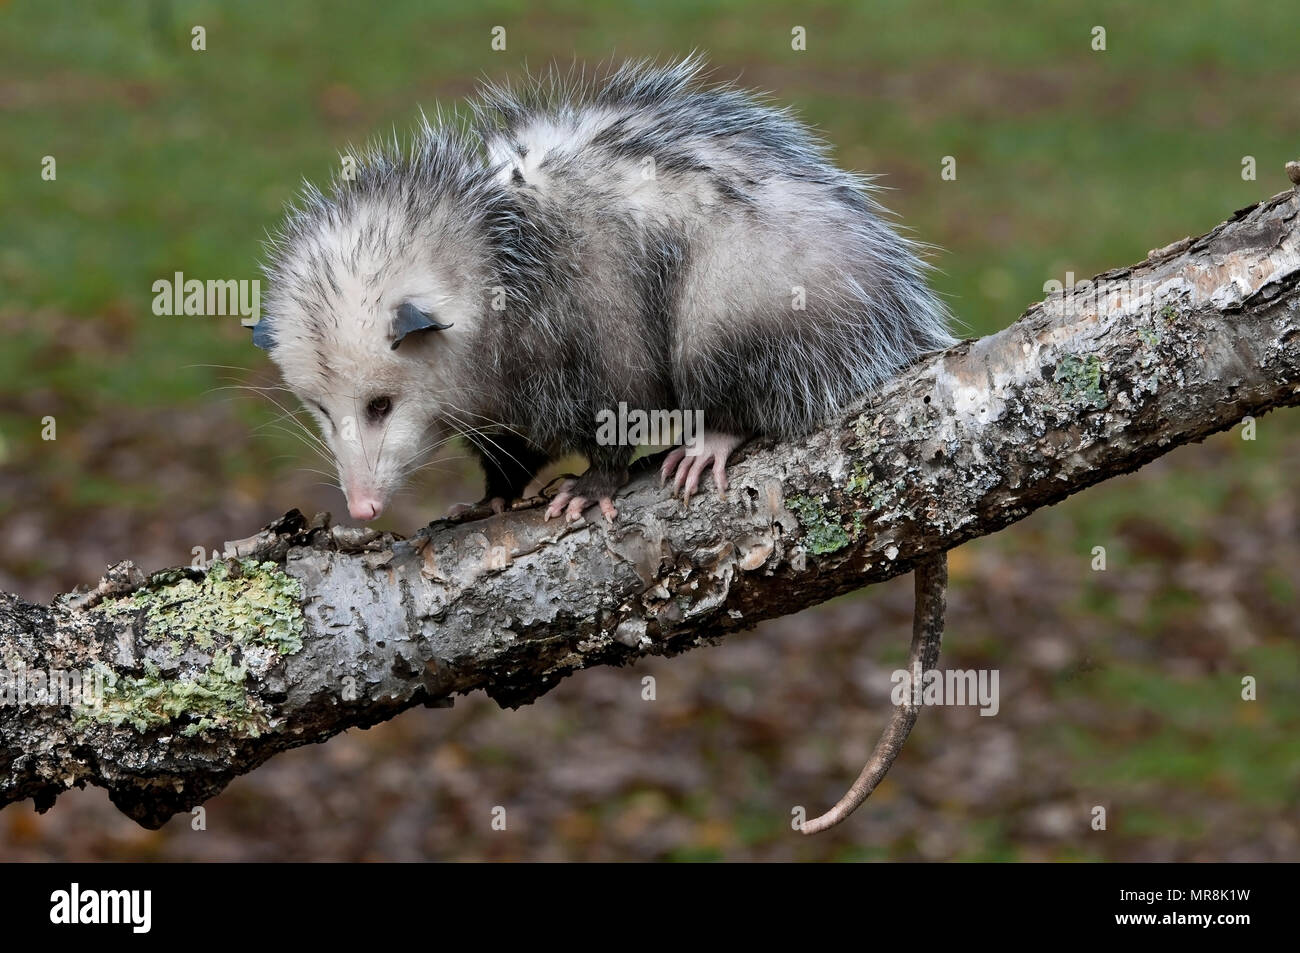 Opossum (Didelphis virginiana) auf Ast, E USA, durch Überspringen Moody/Dembinsky Foto Assoc Stockfoto